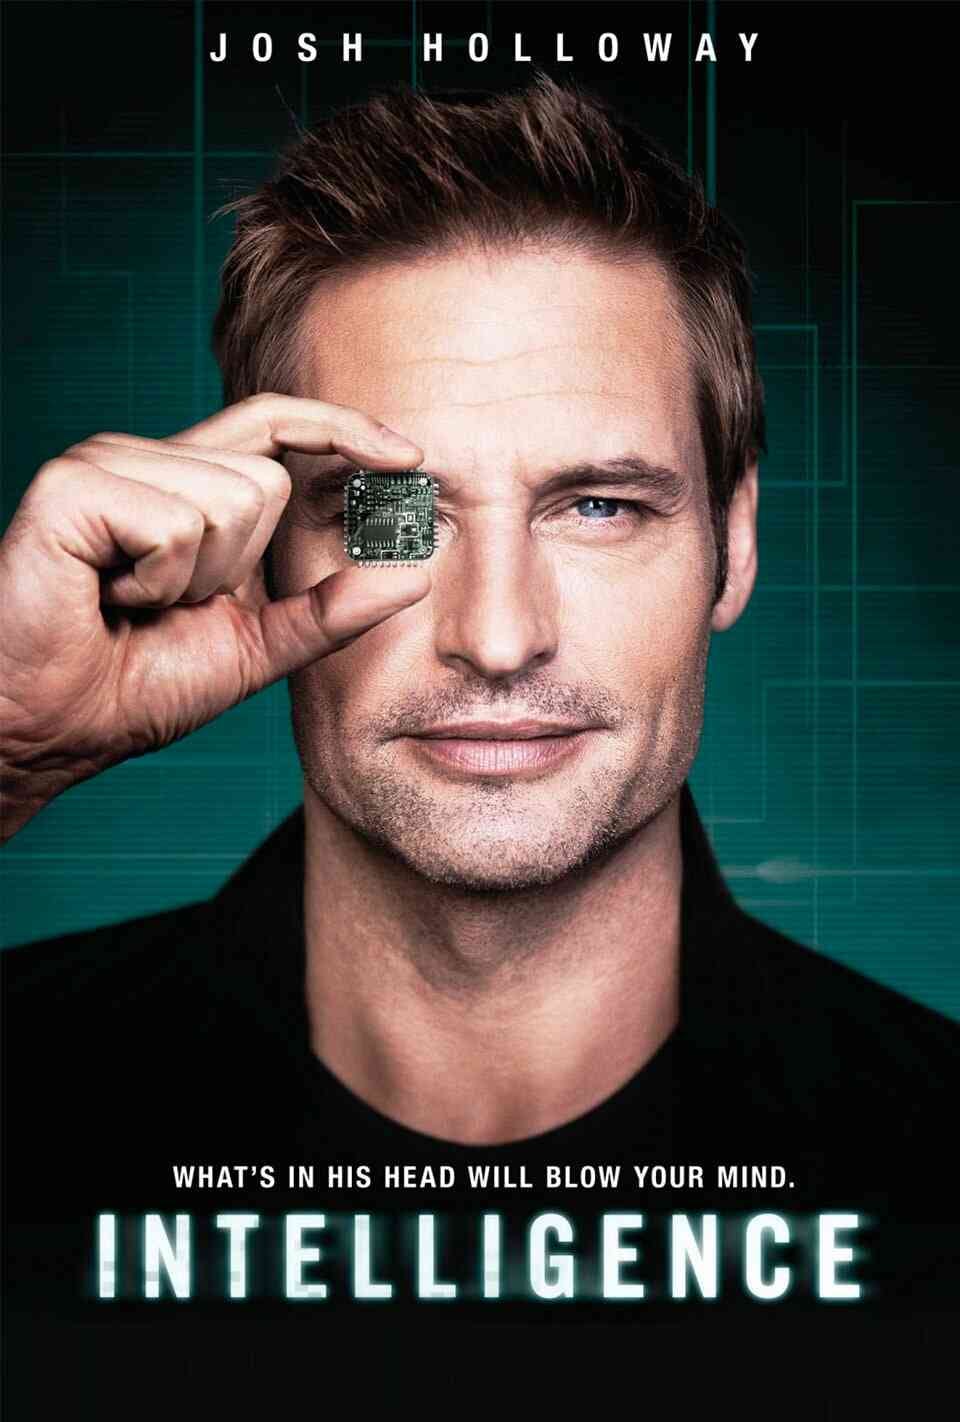 Read Intelligence screenplay (poster)